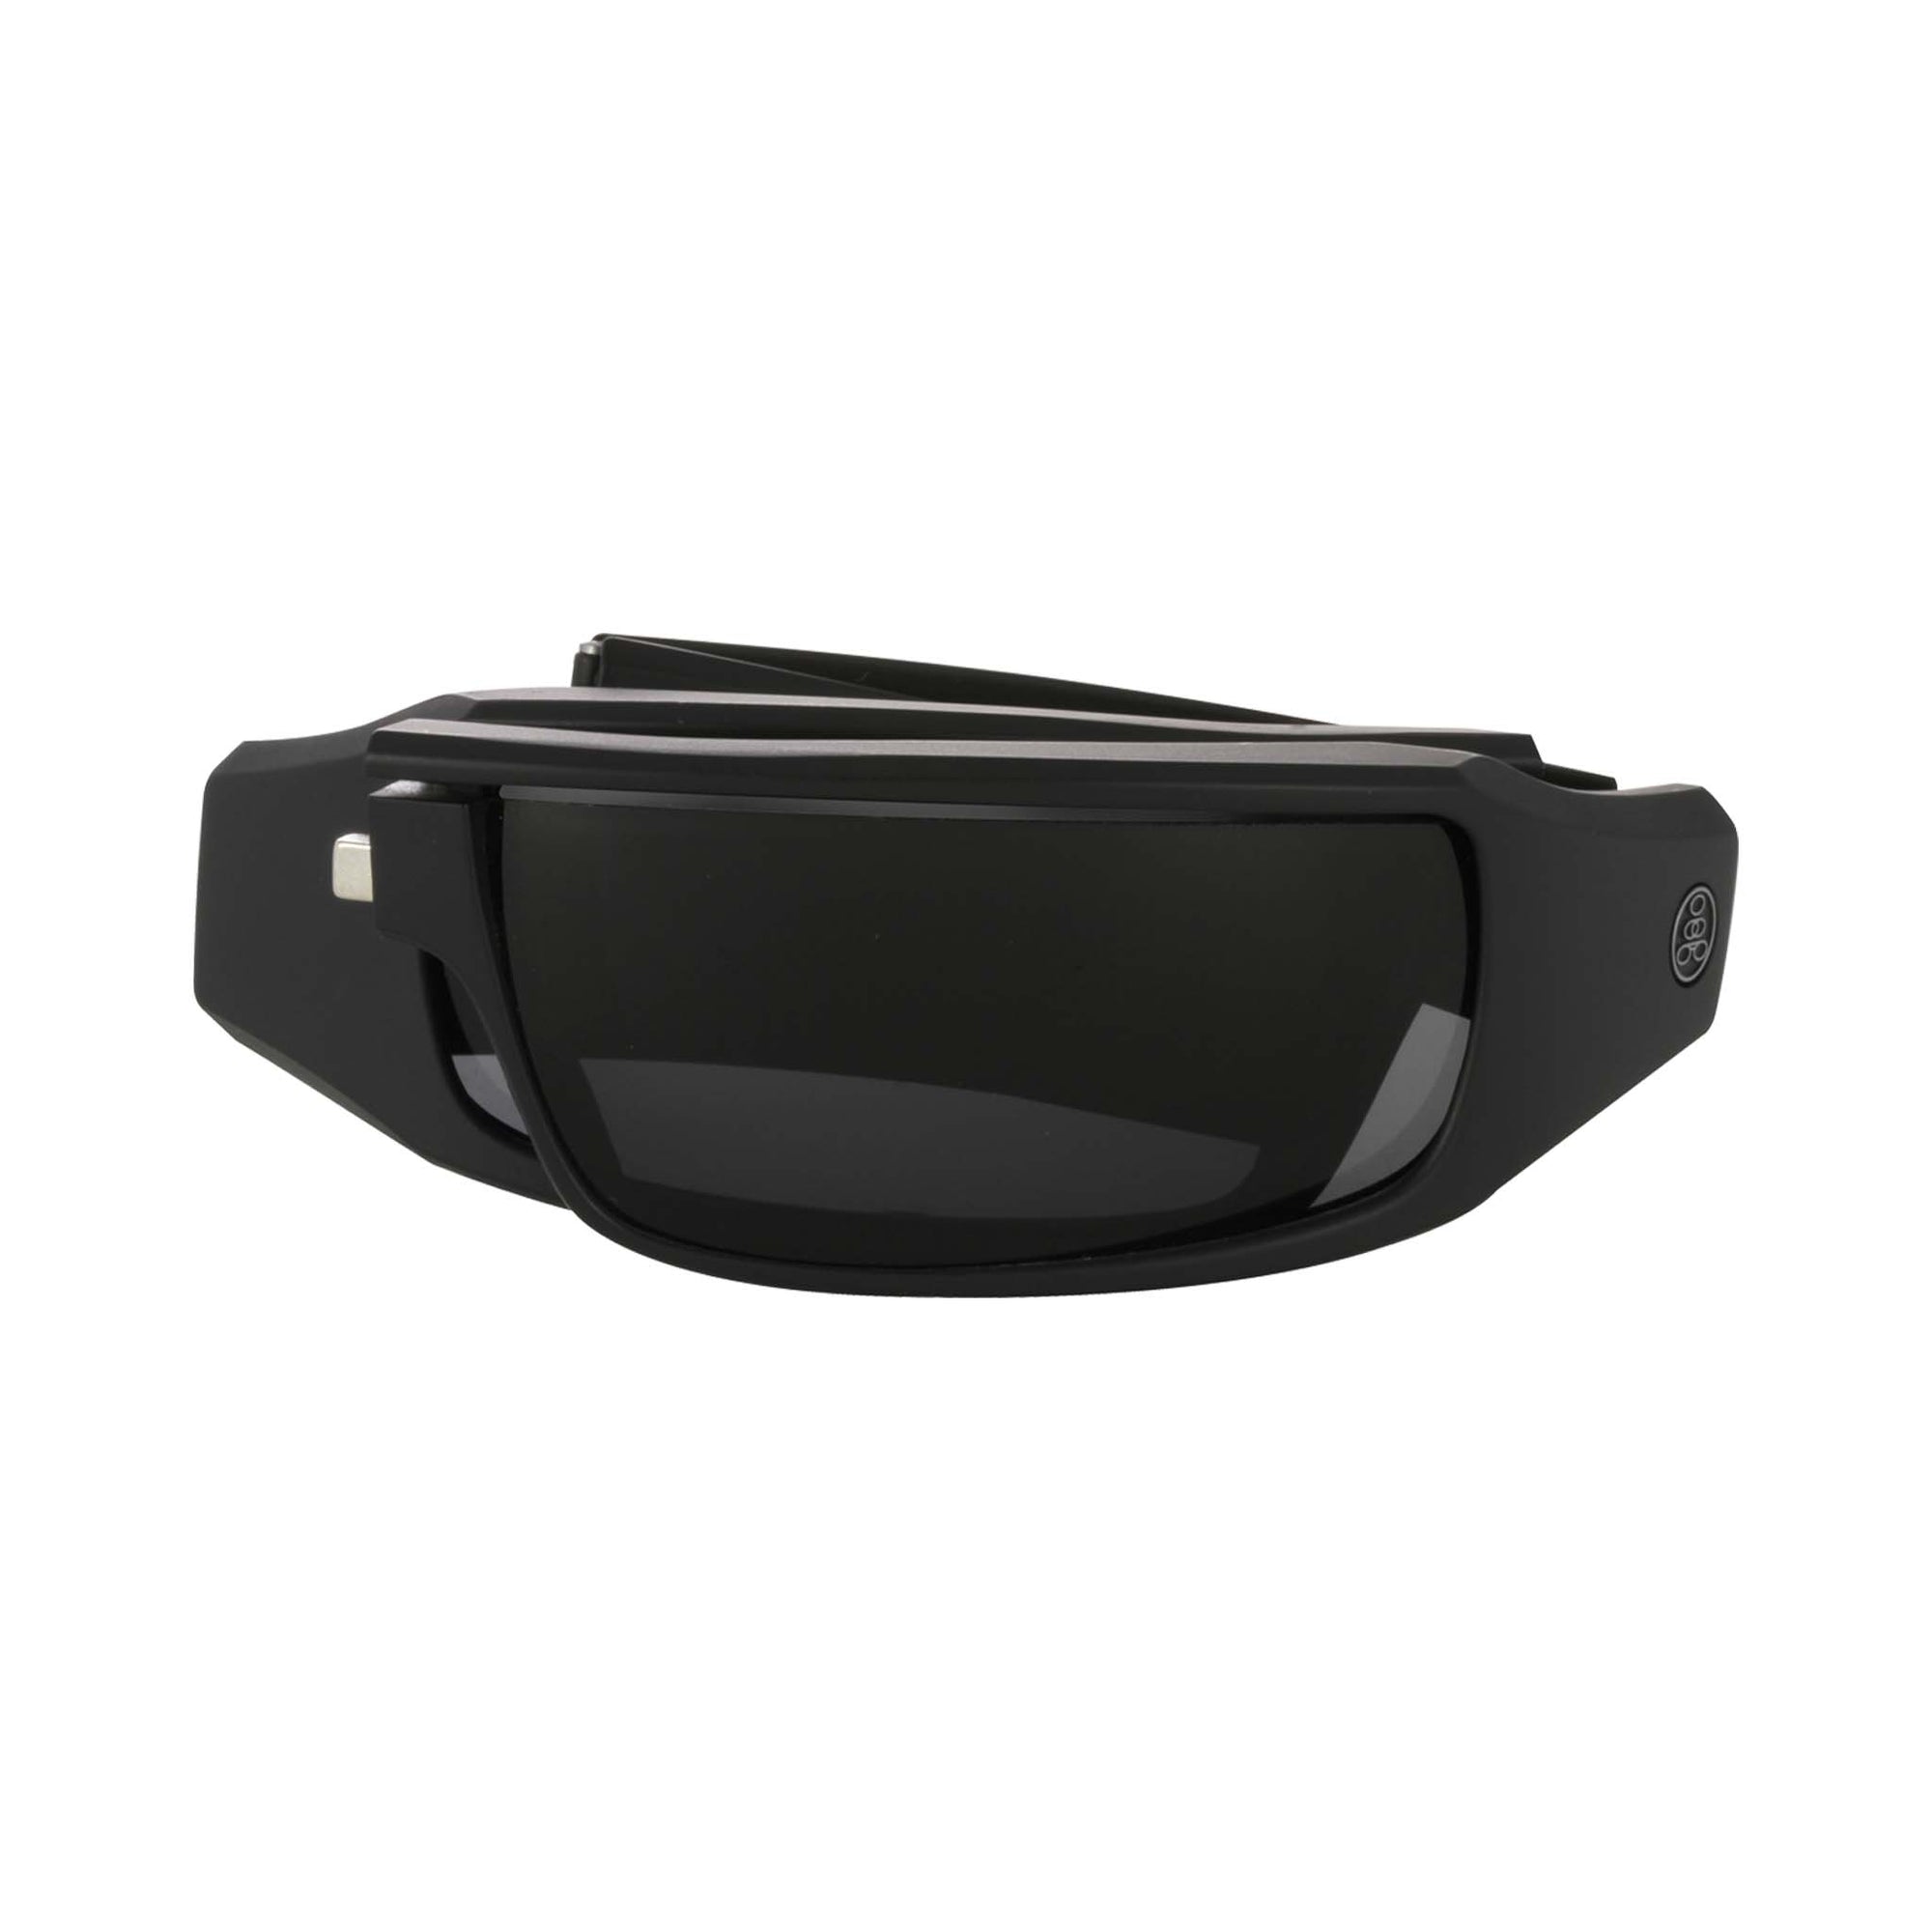 Popticals, Premium Compact Sunglasses, PopSign, 010020-BMGP, Polarized Sunglasses, Matte Black Frame, Gray Lenses, Compact View